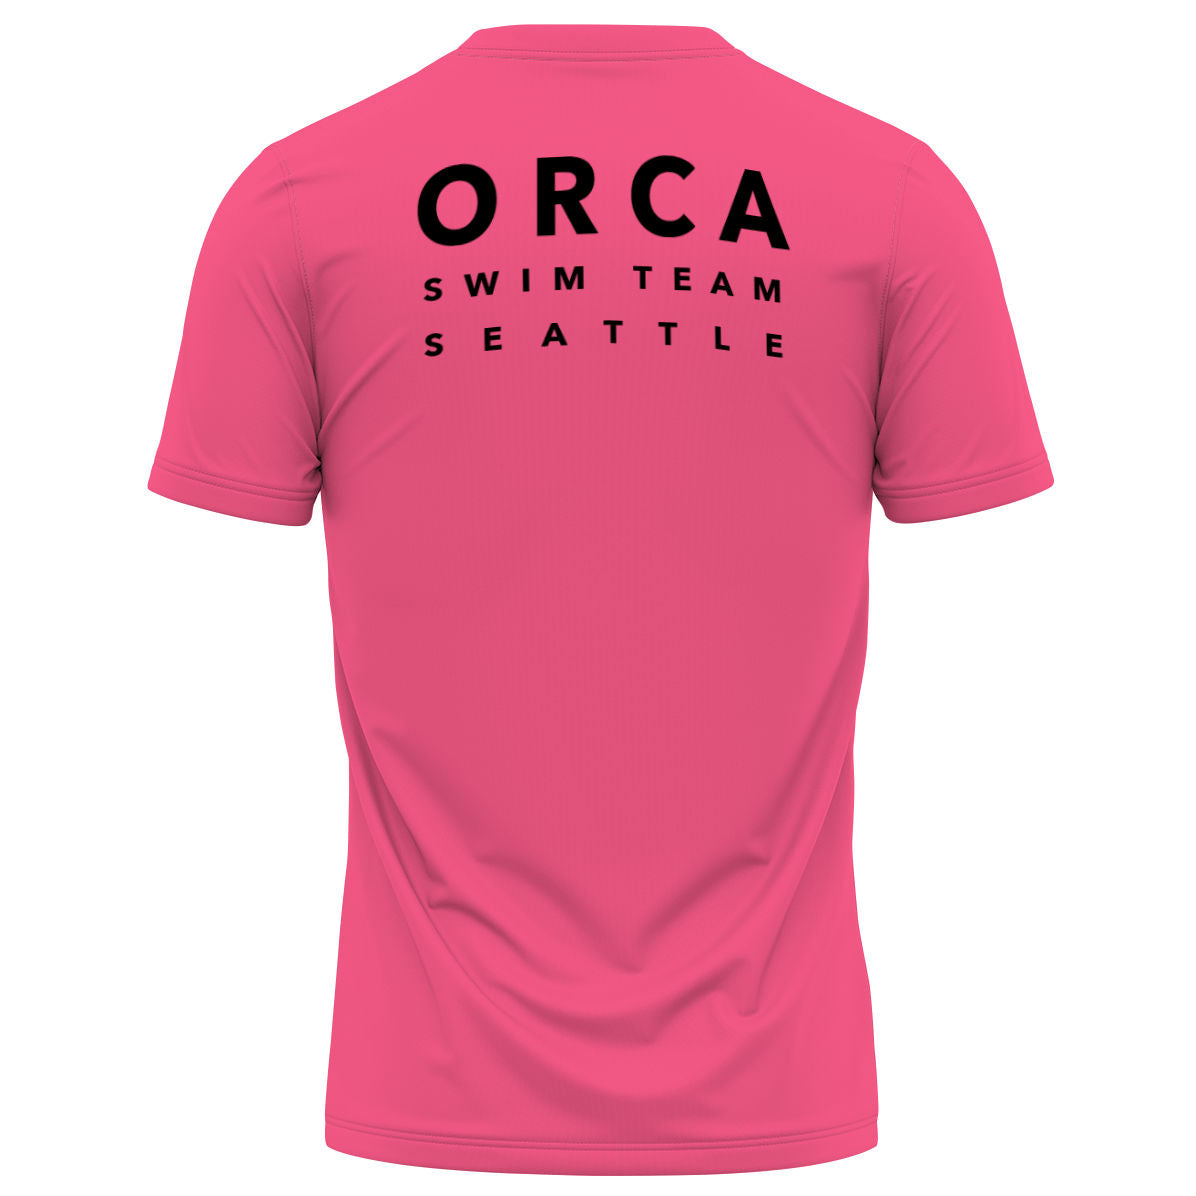 Orca Shirt - Performance Shirt